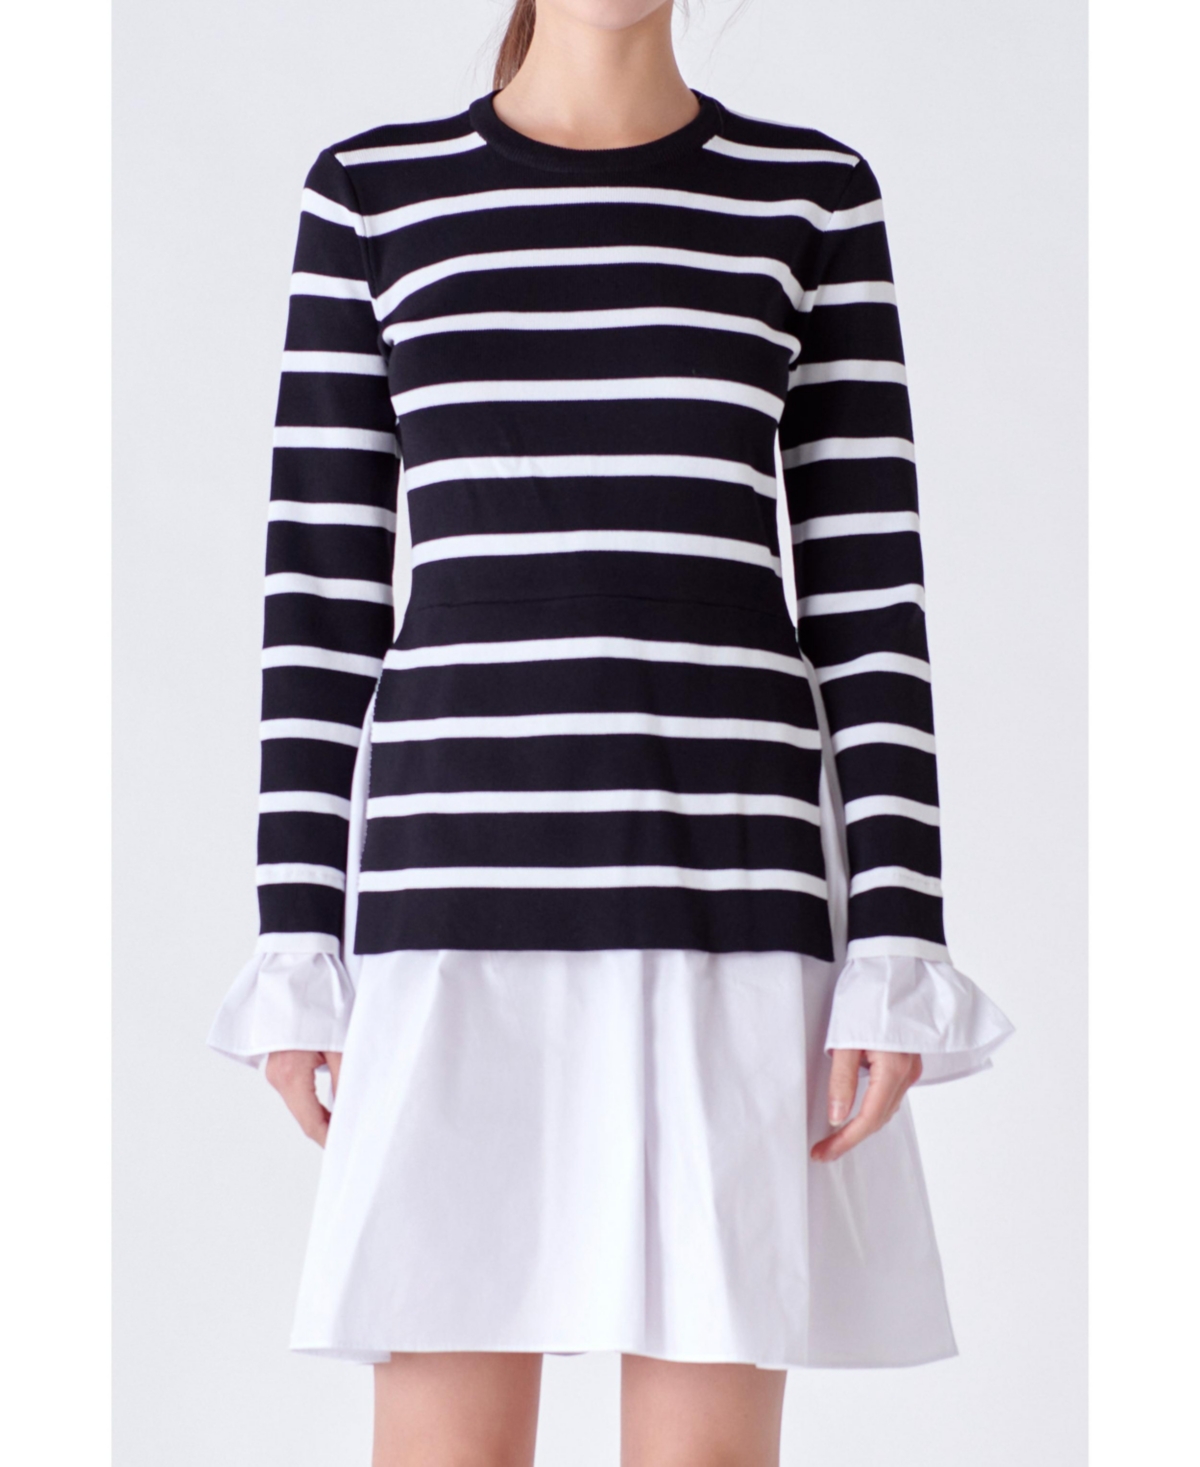 Downton Abbey Inspired Dresses Womens Poplin Combo Knit Dress - Black stripe $90.00 AT vintagedancer.com